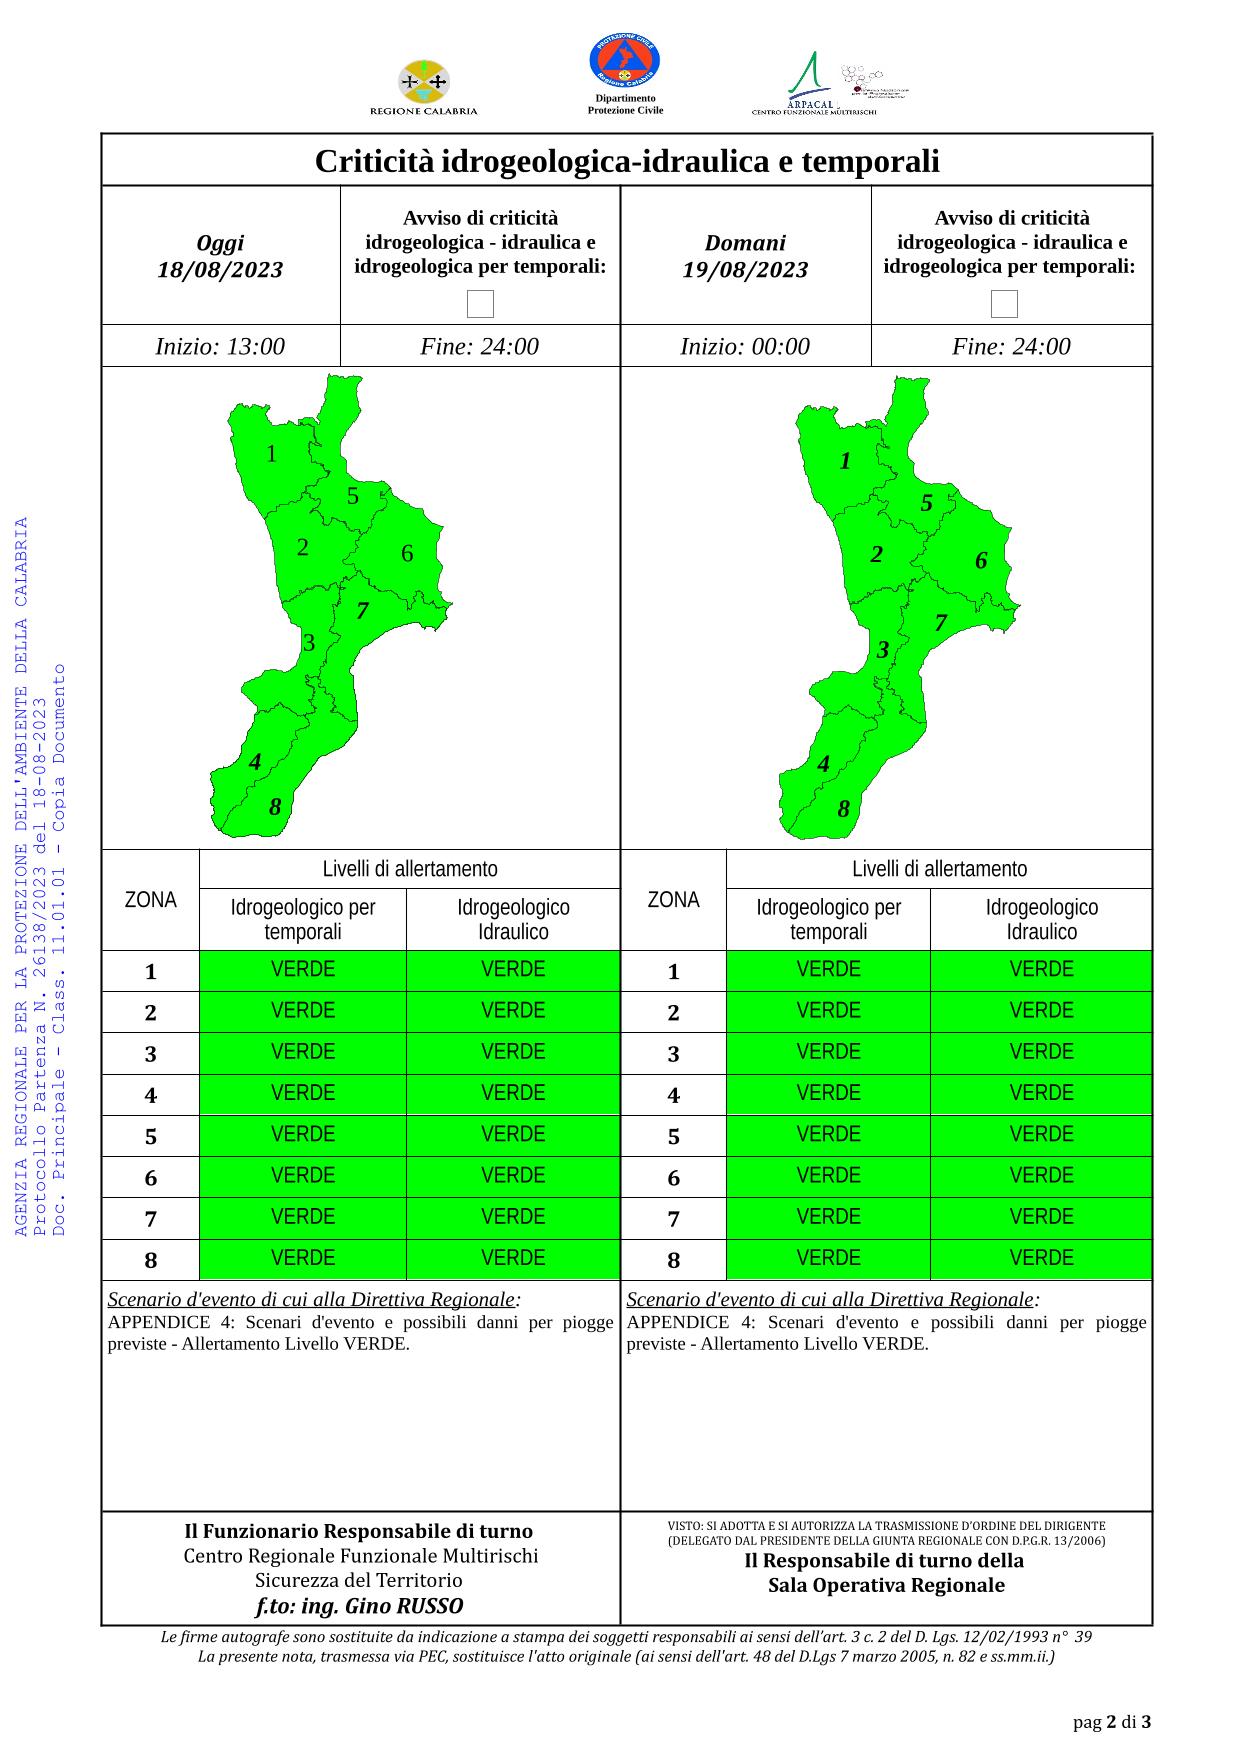 Criticità idrogeologica-idraulica e temporali in Calabria 18-08-2023